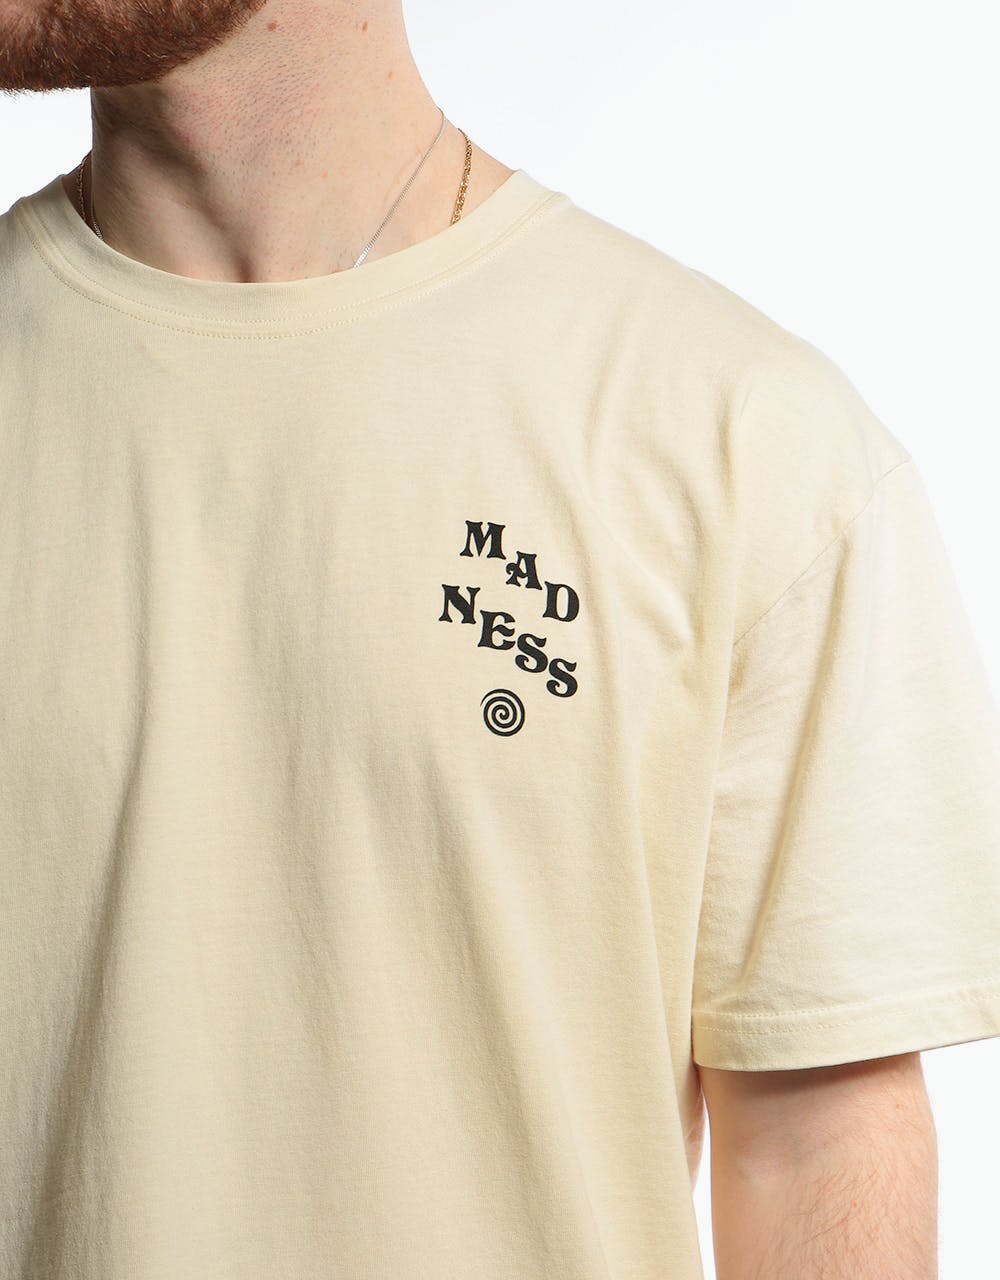 Madness Seal T-Shirt - Bone White